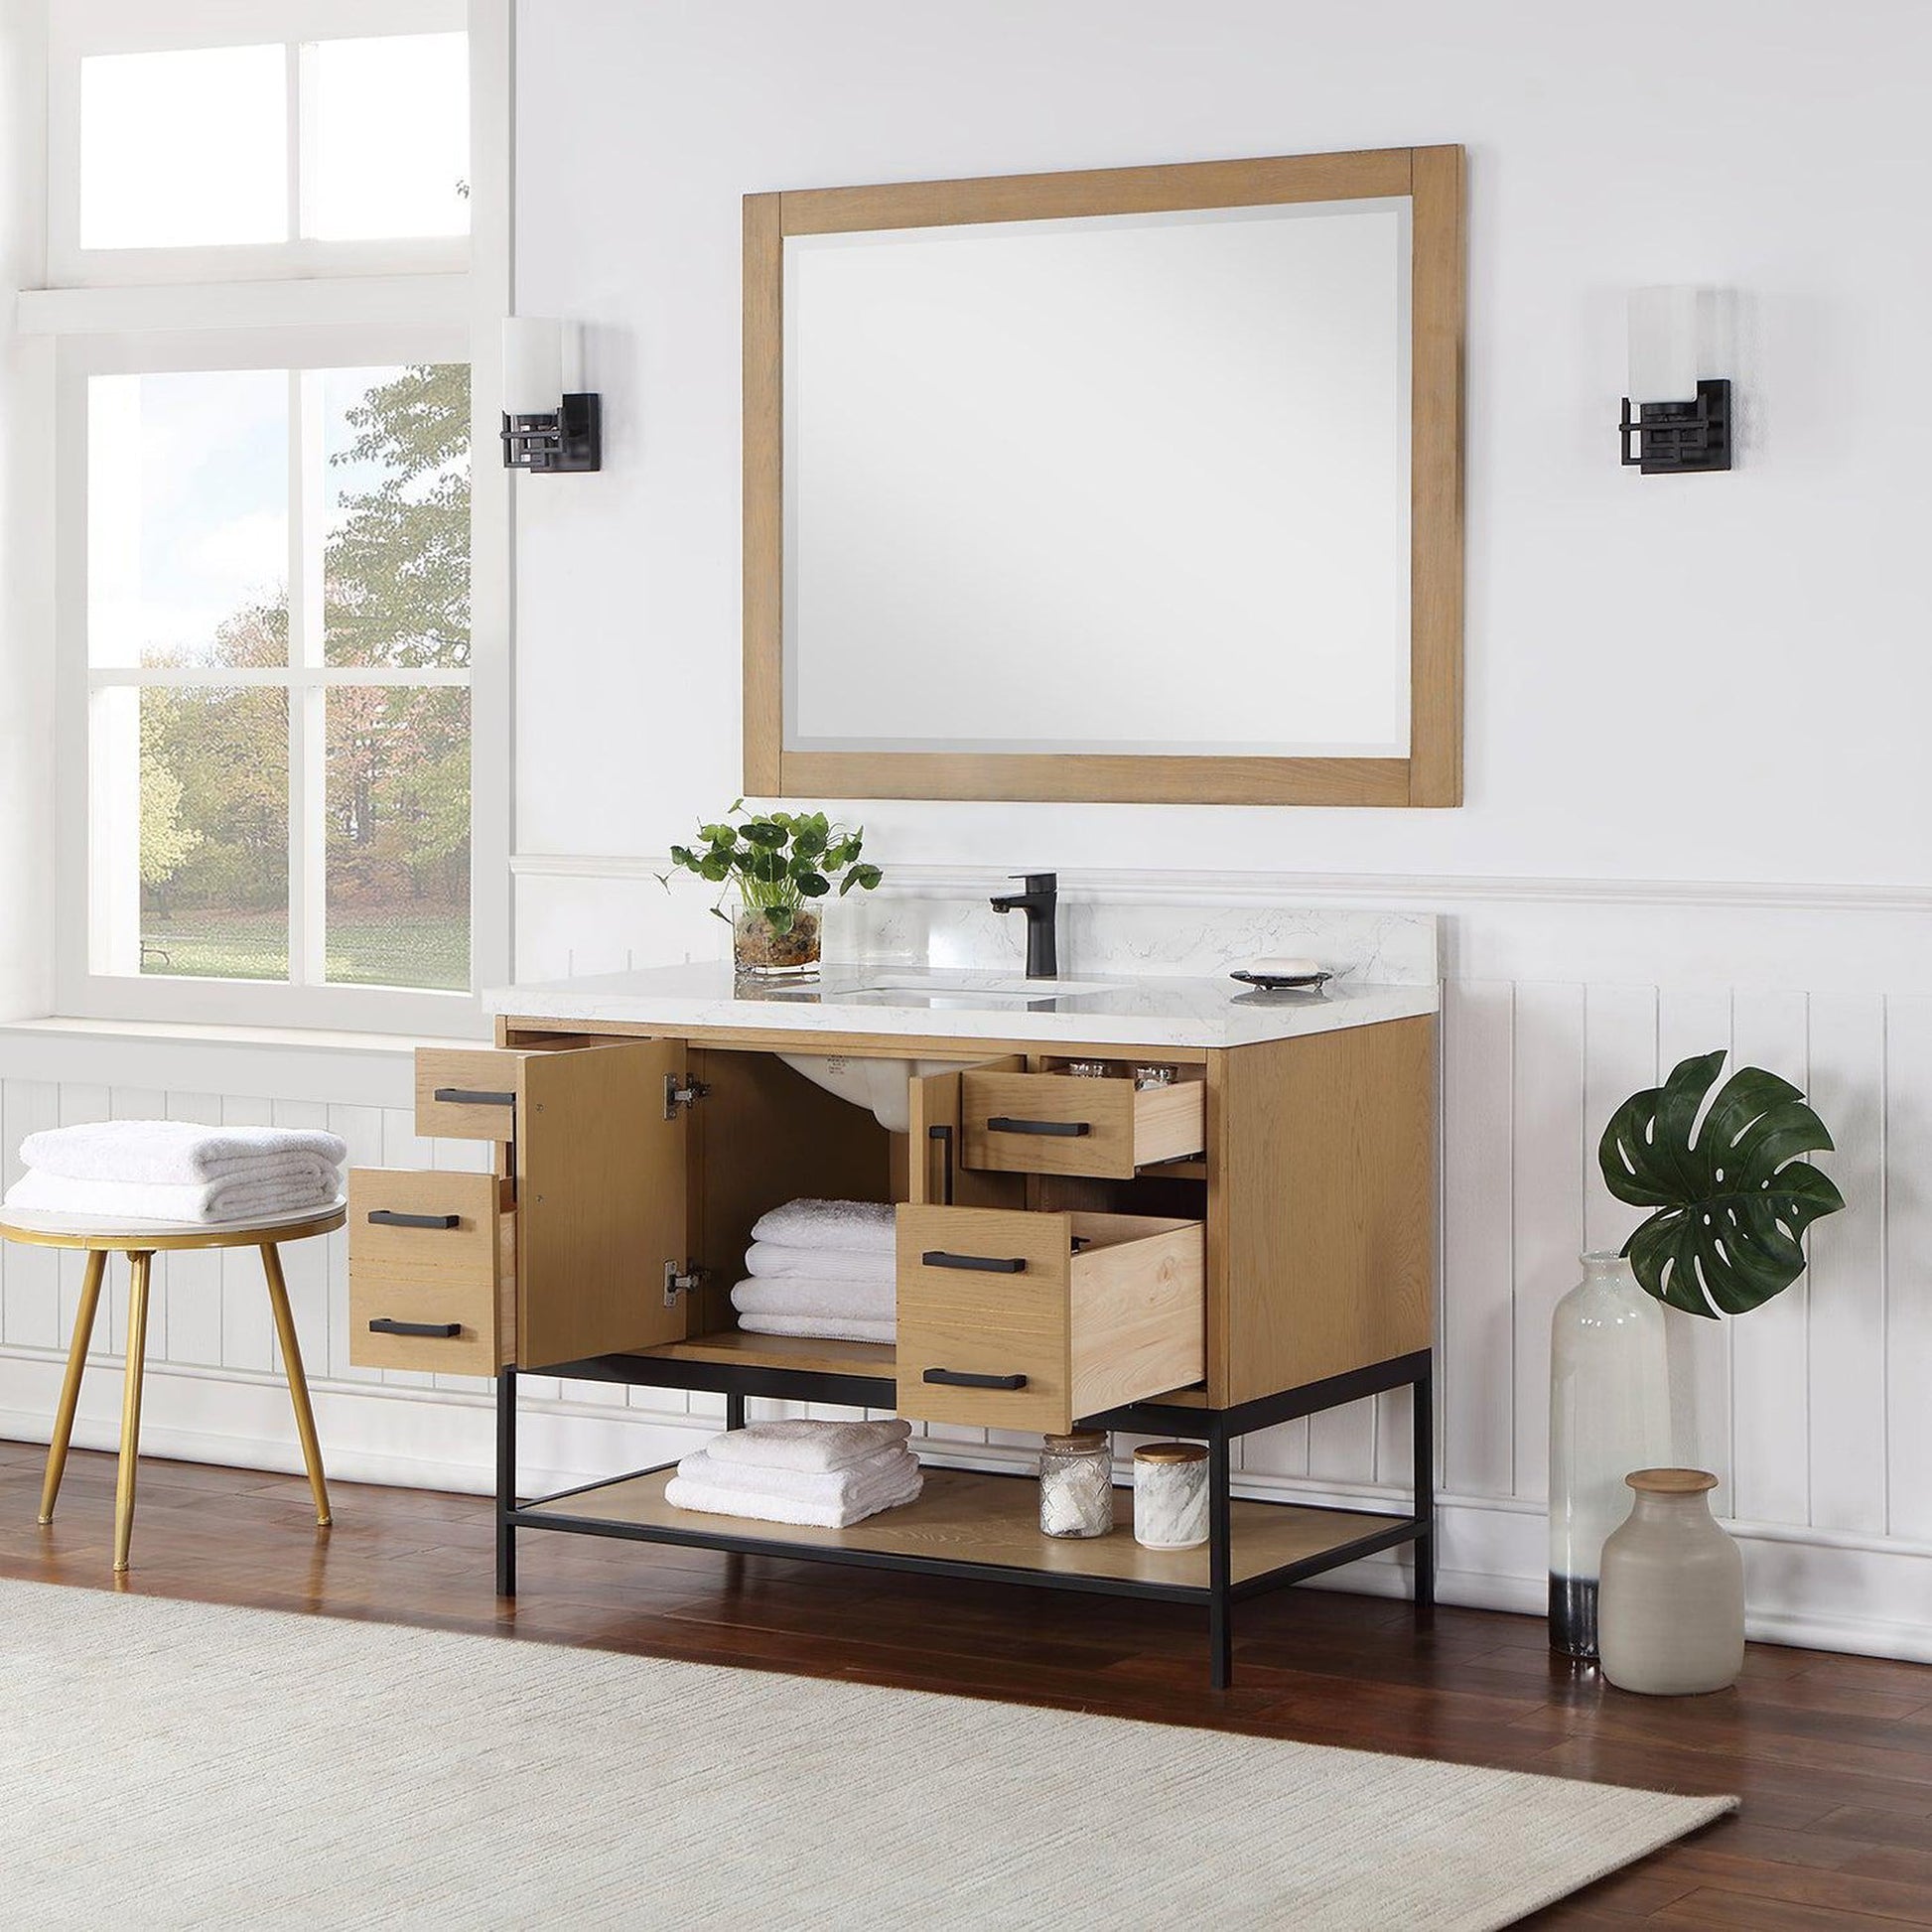 Altair Wildy 48" Washed Oak Freestanding Single Bathroom Vanity Set With Mirror, Stylish Composite Grain White Stone Top, Rectangular Undermount Ceramic Sink, Overflow, and Backsplash